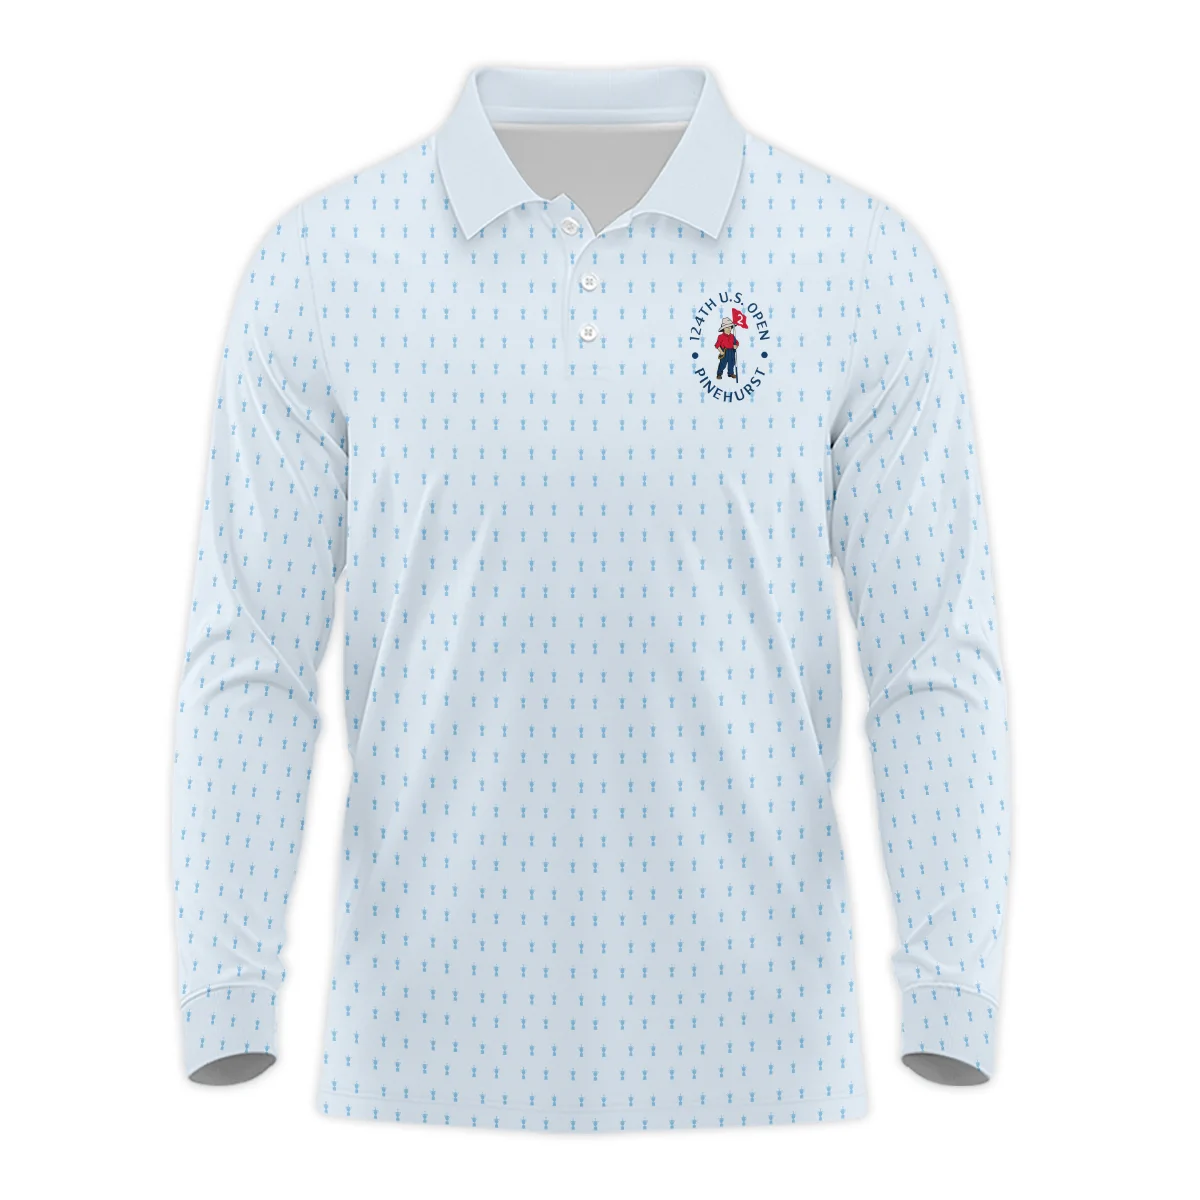 Golf Pattern Cup Light Blue Green 124th U.S. Open Pinehurst Hoodie Shirt Style Classic Hoodie Shirt